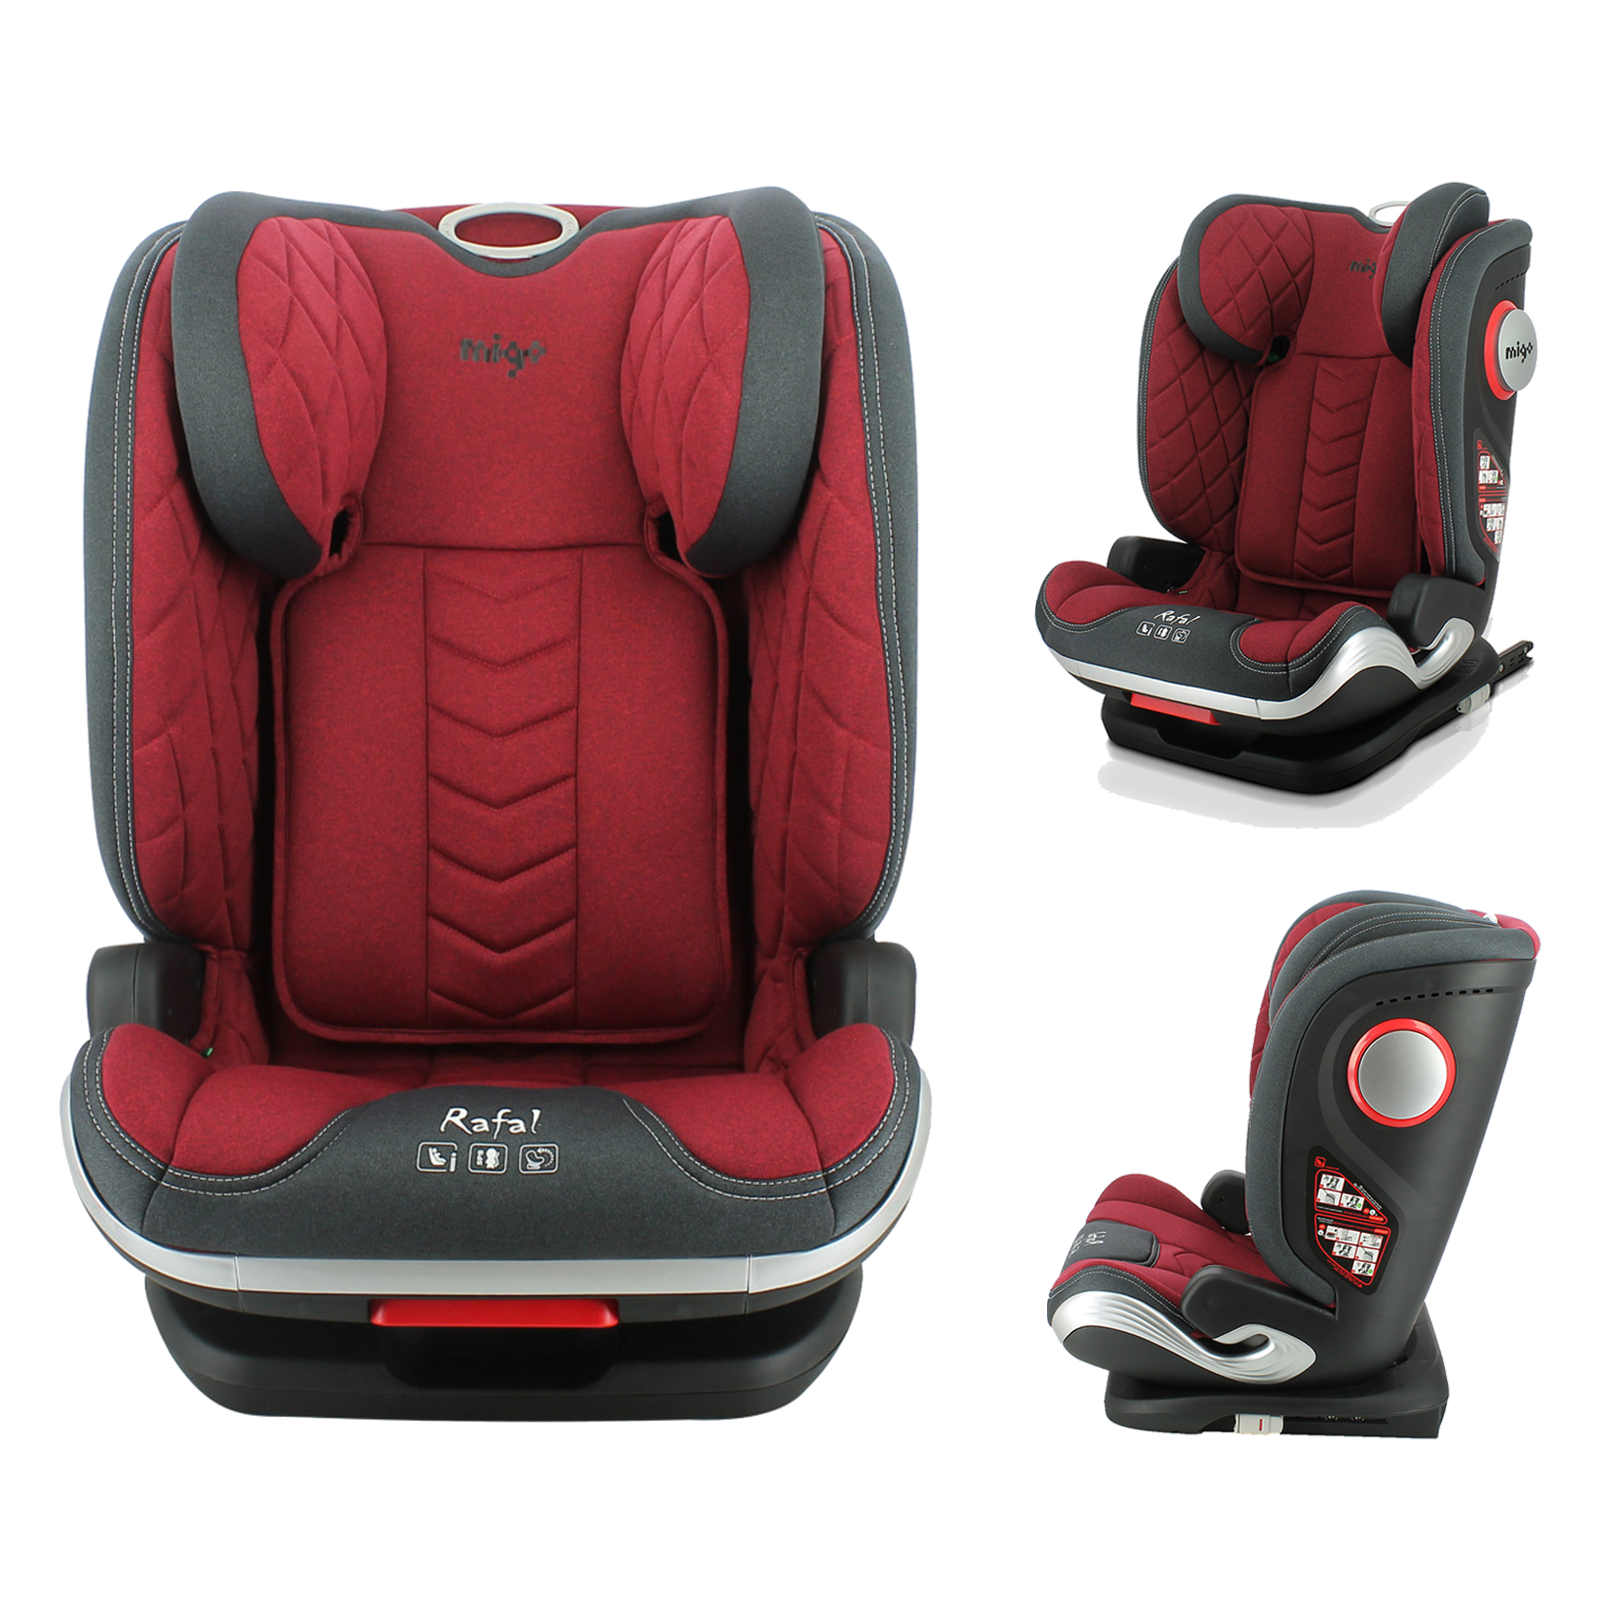 Migo Rafal Luxury i-Size Group 1,2,3 Car Seat Extra Side Impact Protection - Red